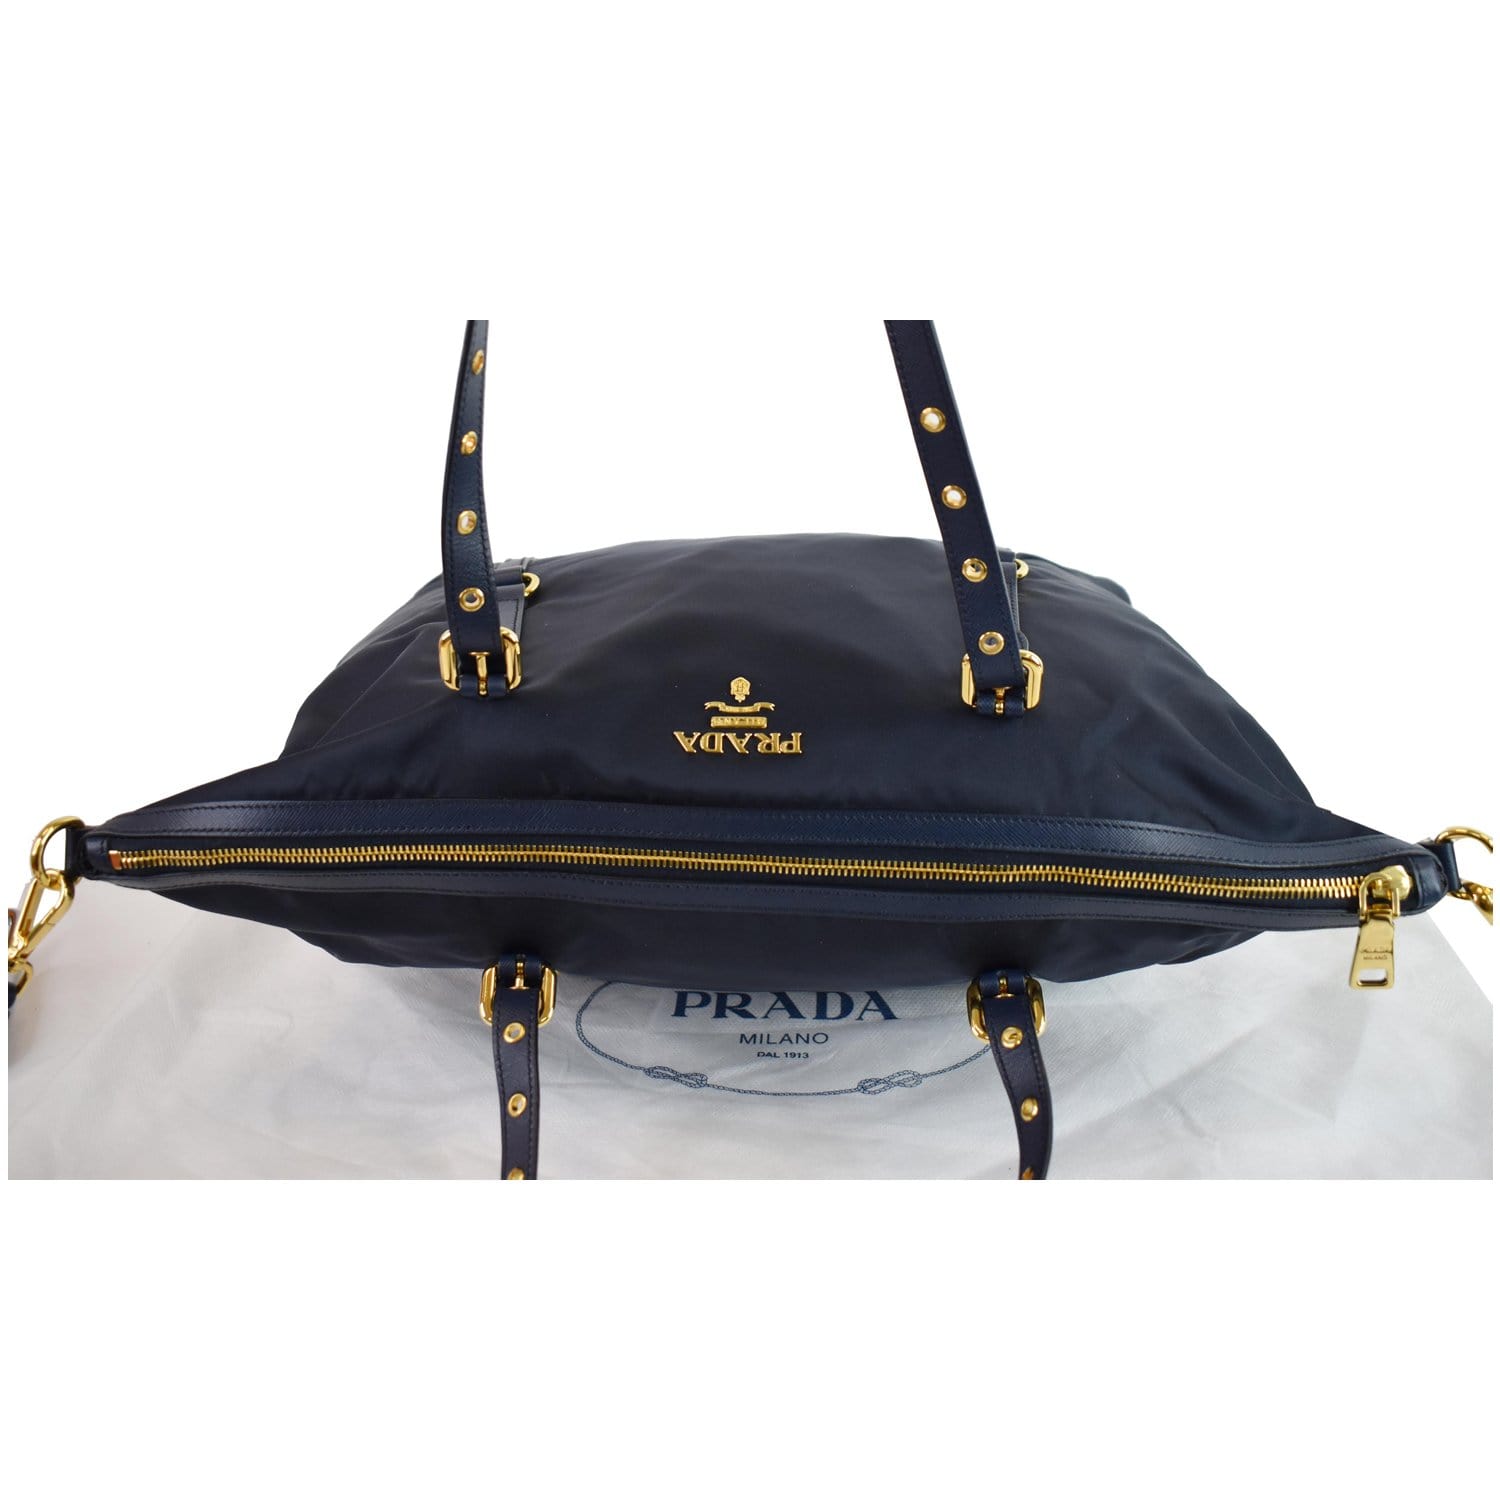 PRADA Tessuto CITY NYLON Triple Compartmen Dark BLUE Shoulder Bag #29  Authentic!